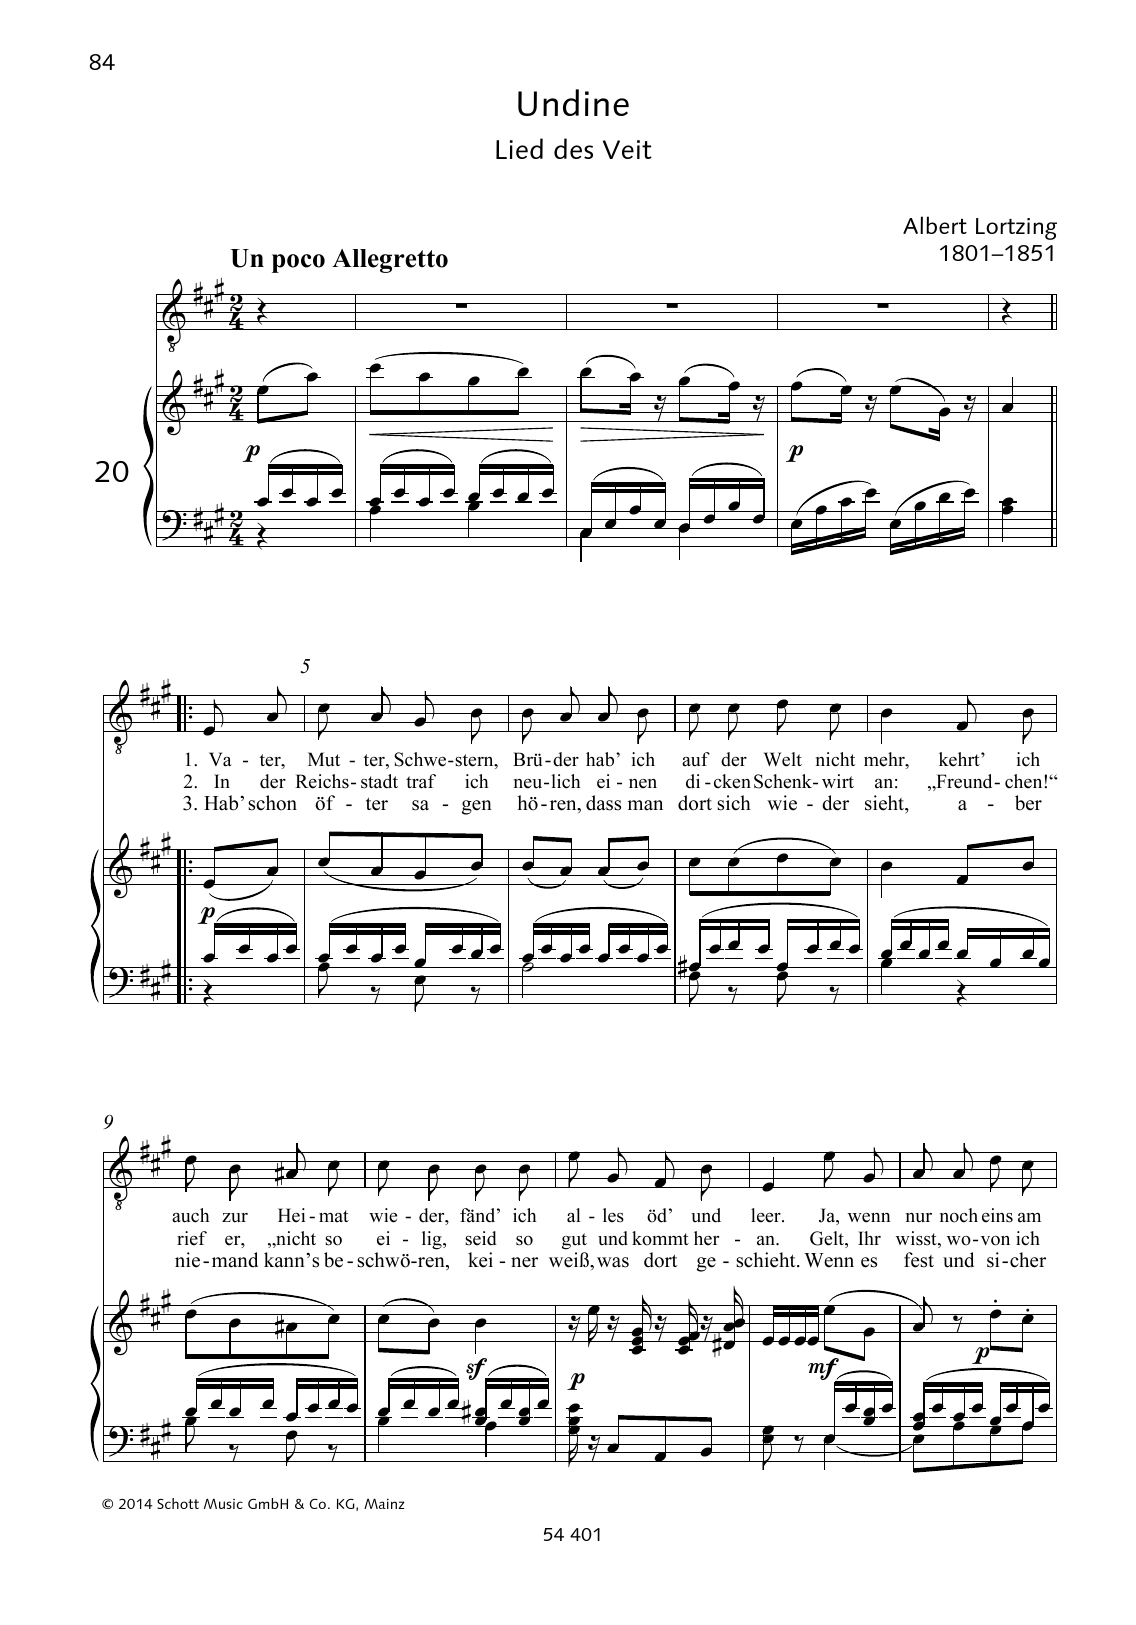 Albert Lortzing Vater, Mutter, Schwestern, Brüder Sheet Music Notes & Chords for Piano & Vocal - Download or Print PDF